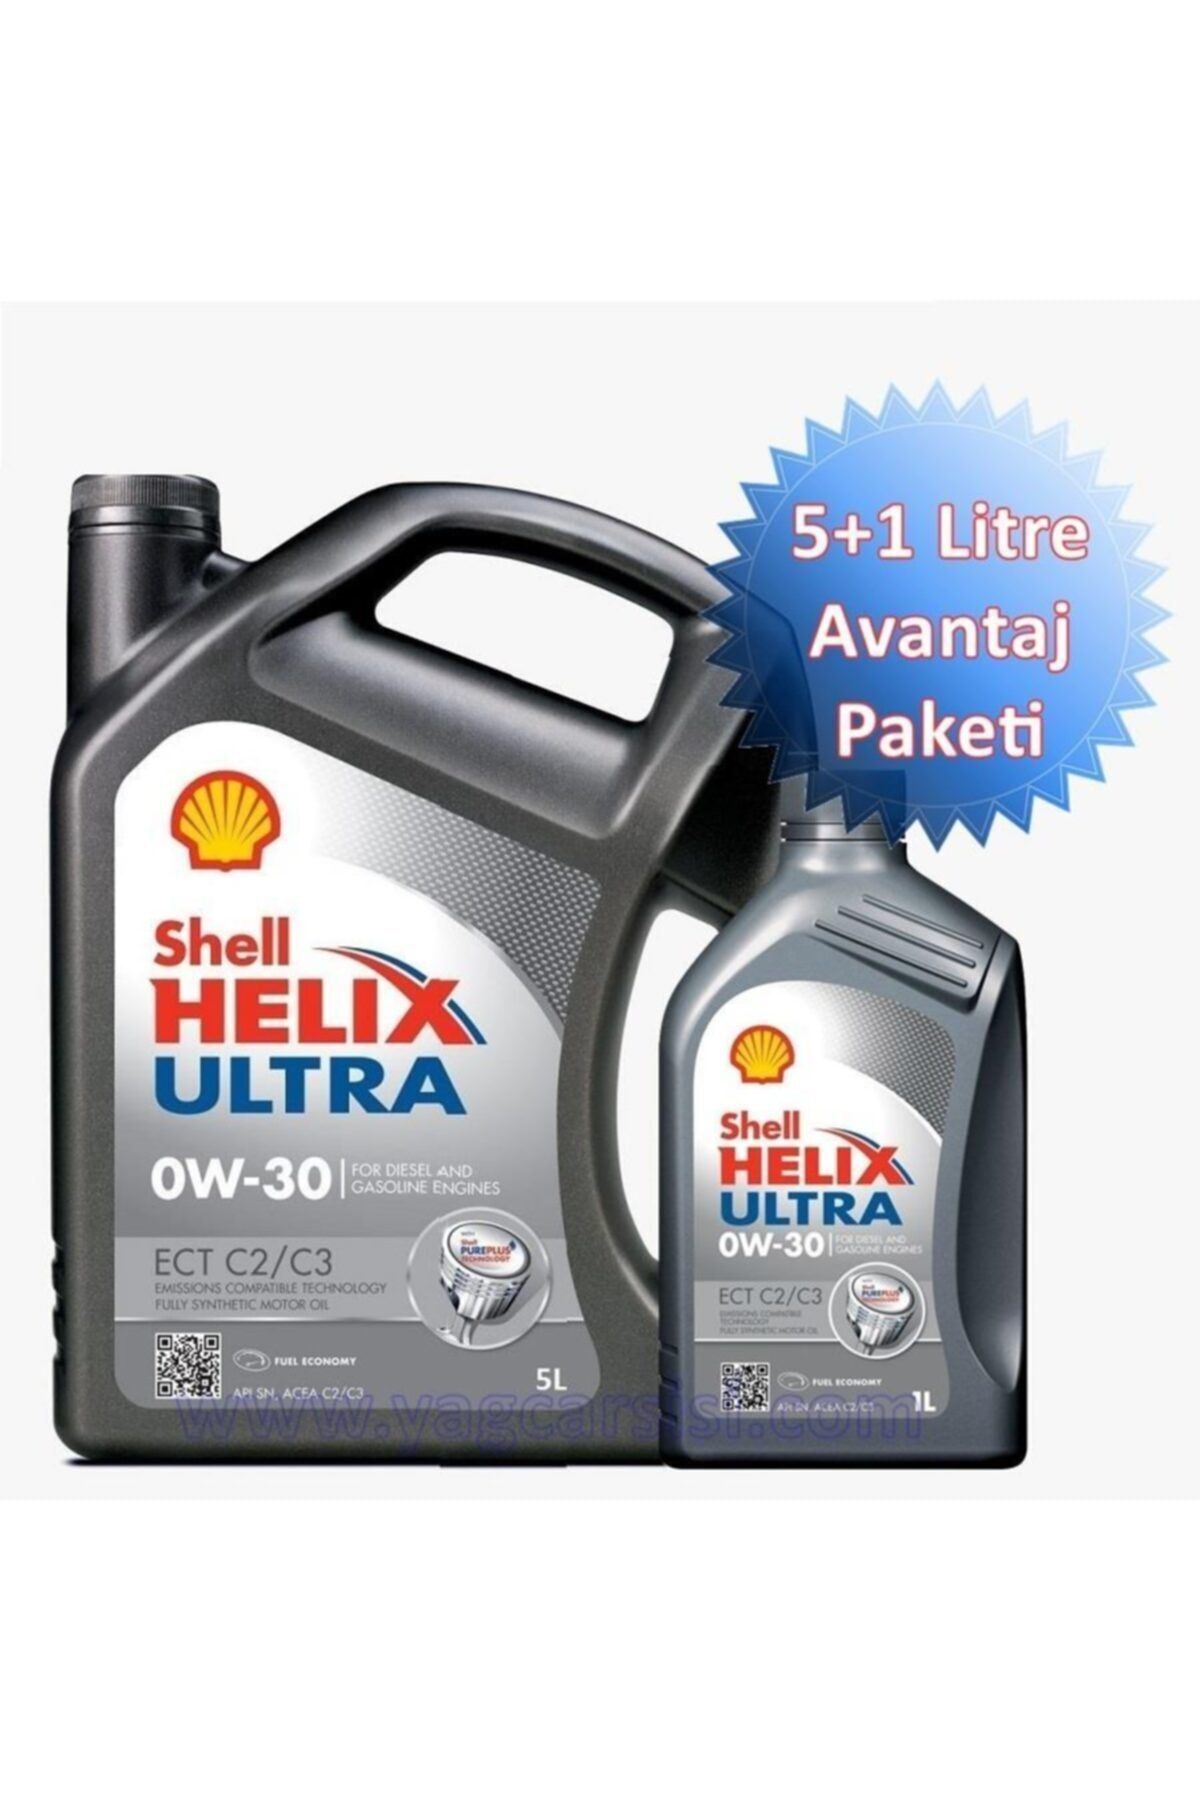 Shell Helix Ultra Ect C2/c3 0w30 6 Litre Avantaj Paketi